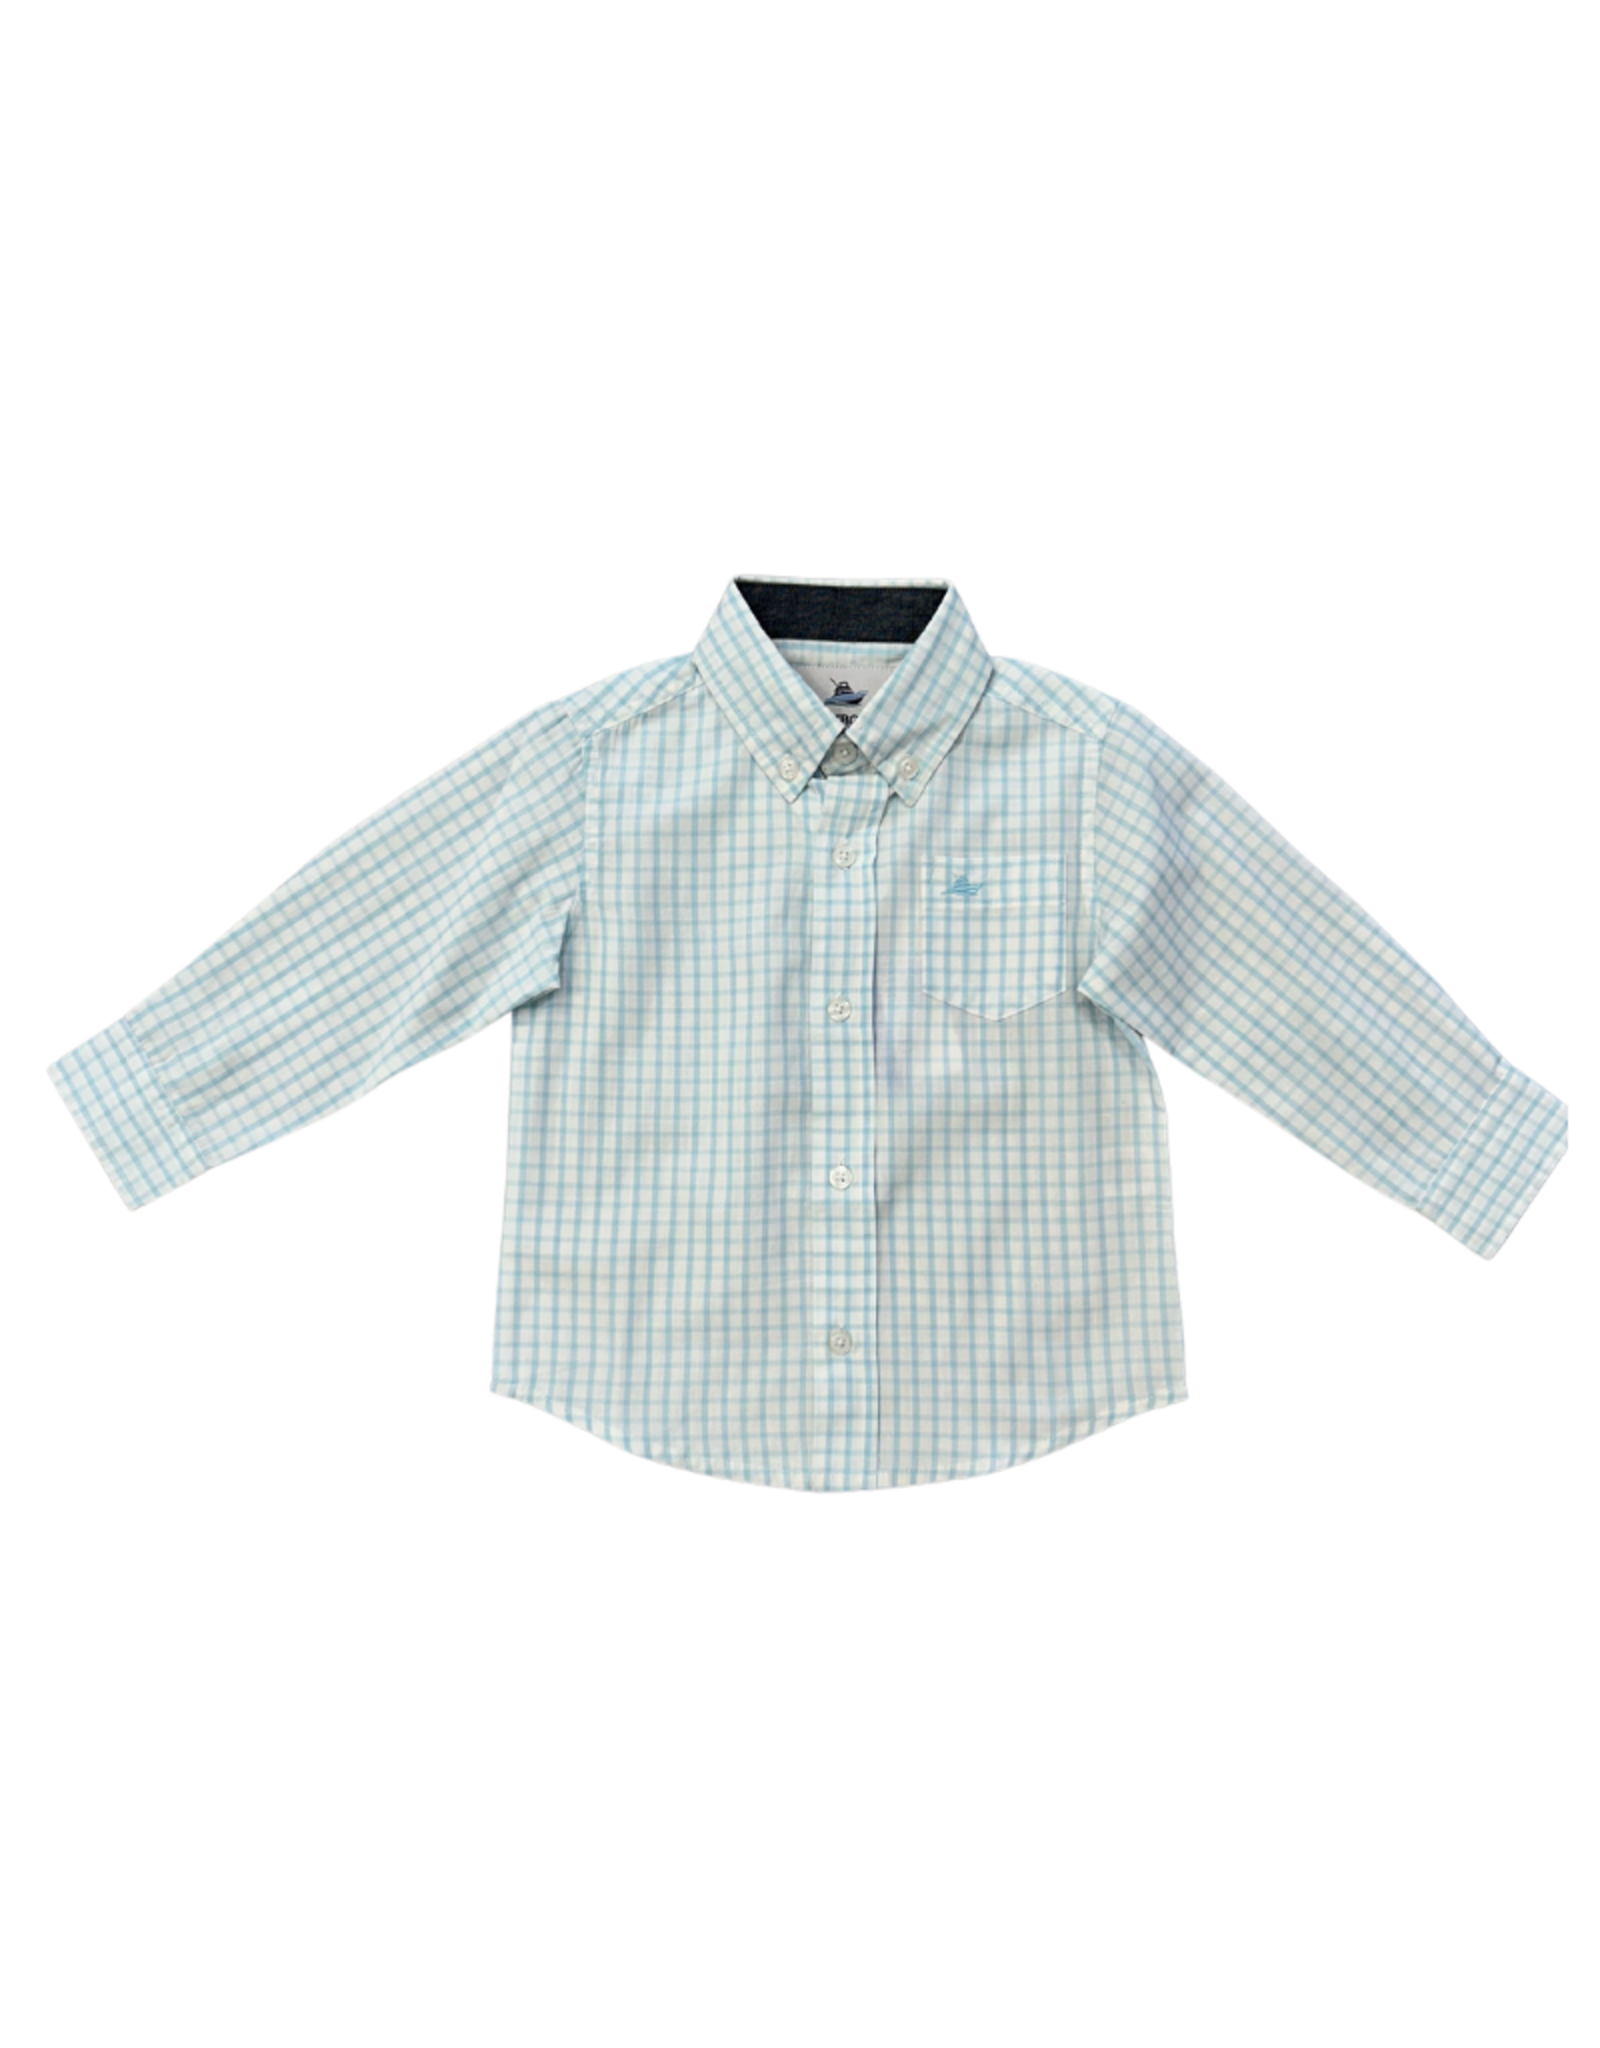 SouthBound Long Sleeve Dress Shirt - Whispering Blue